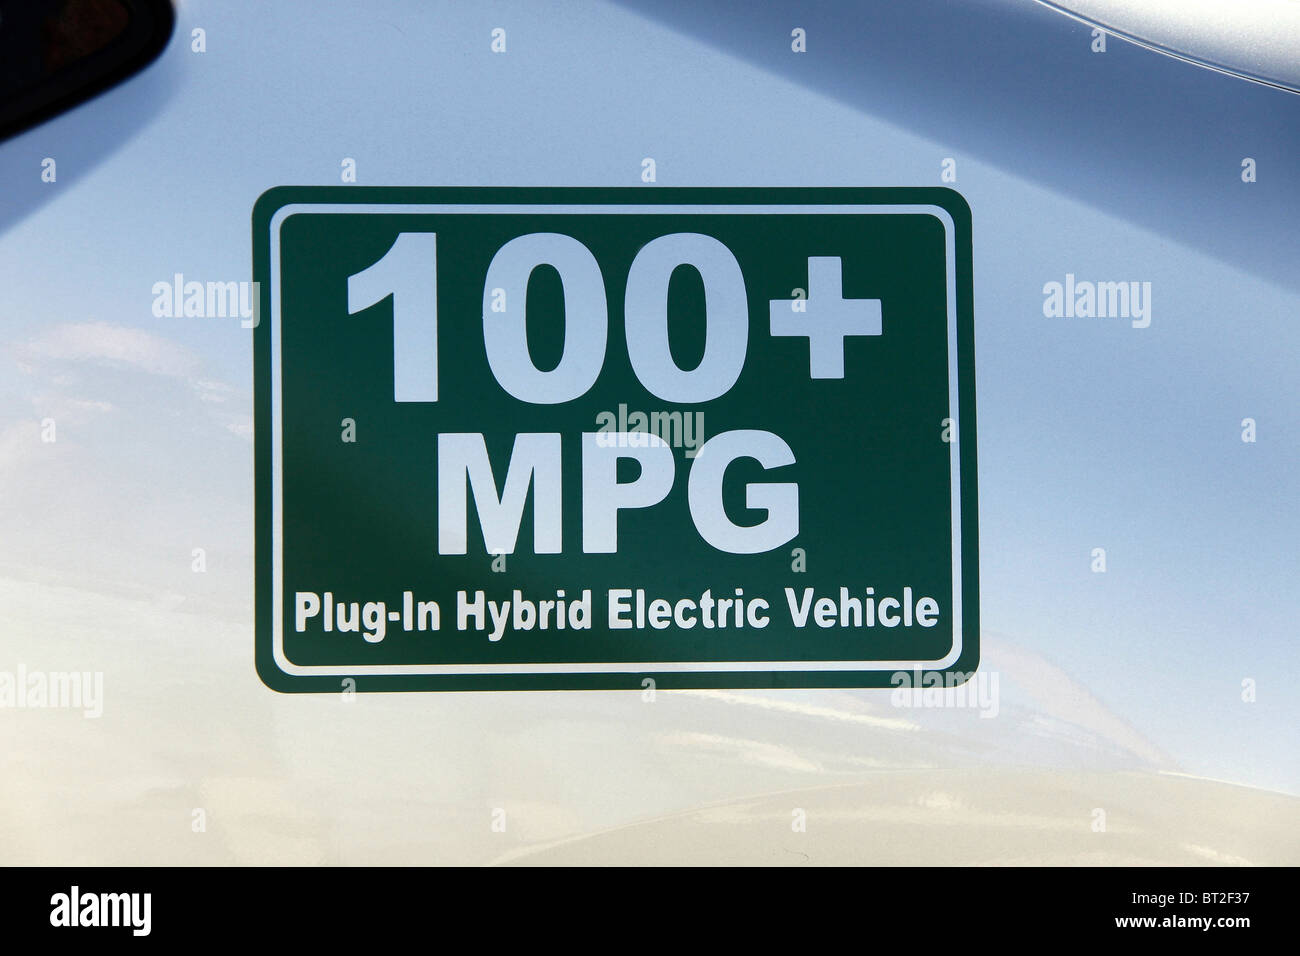 Close up stock photo of a symbol on a hybrid car on display promoting alternative transportation Stock Photo